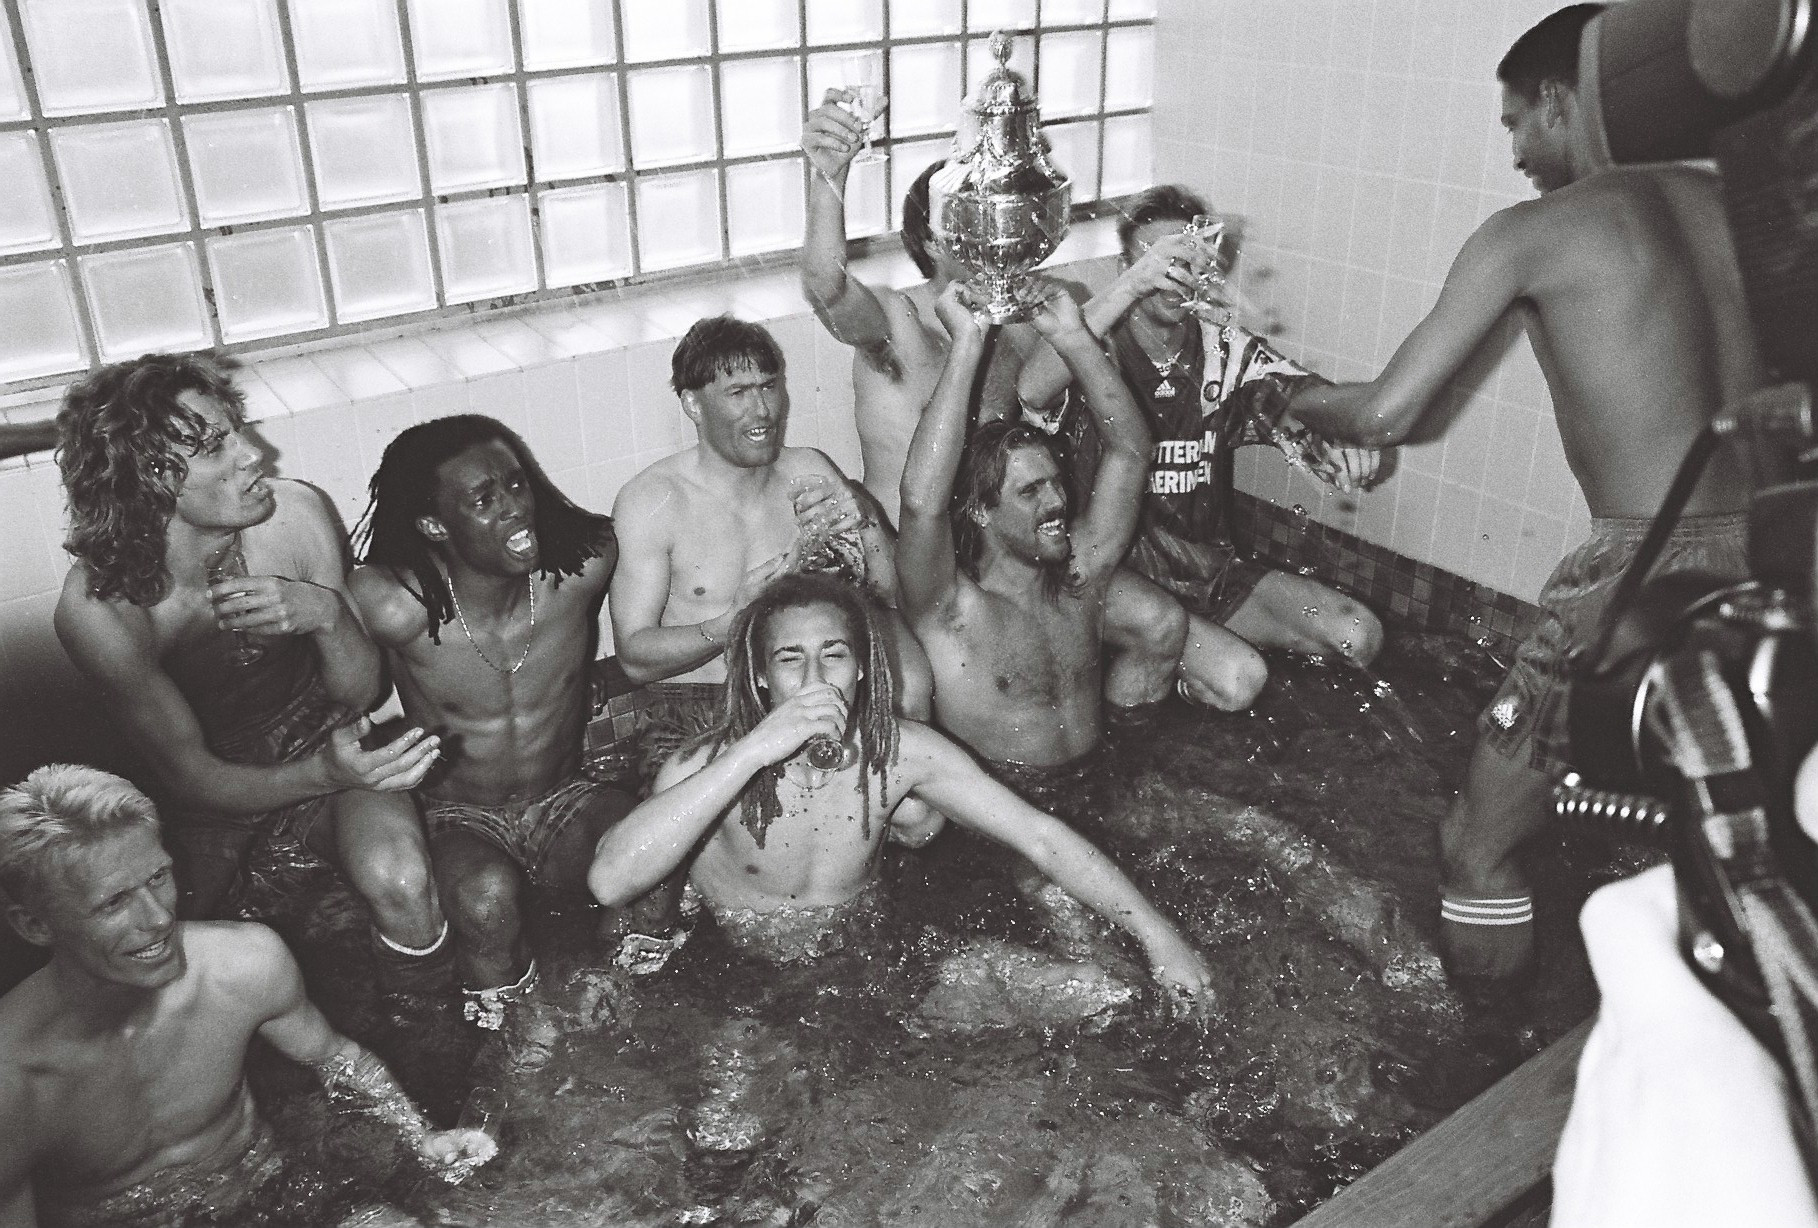 Trophy Day [UNIEKE FOTO'S] • Feyenoord wint laatste bekerfinale in de oude Kuip (1994)